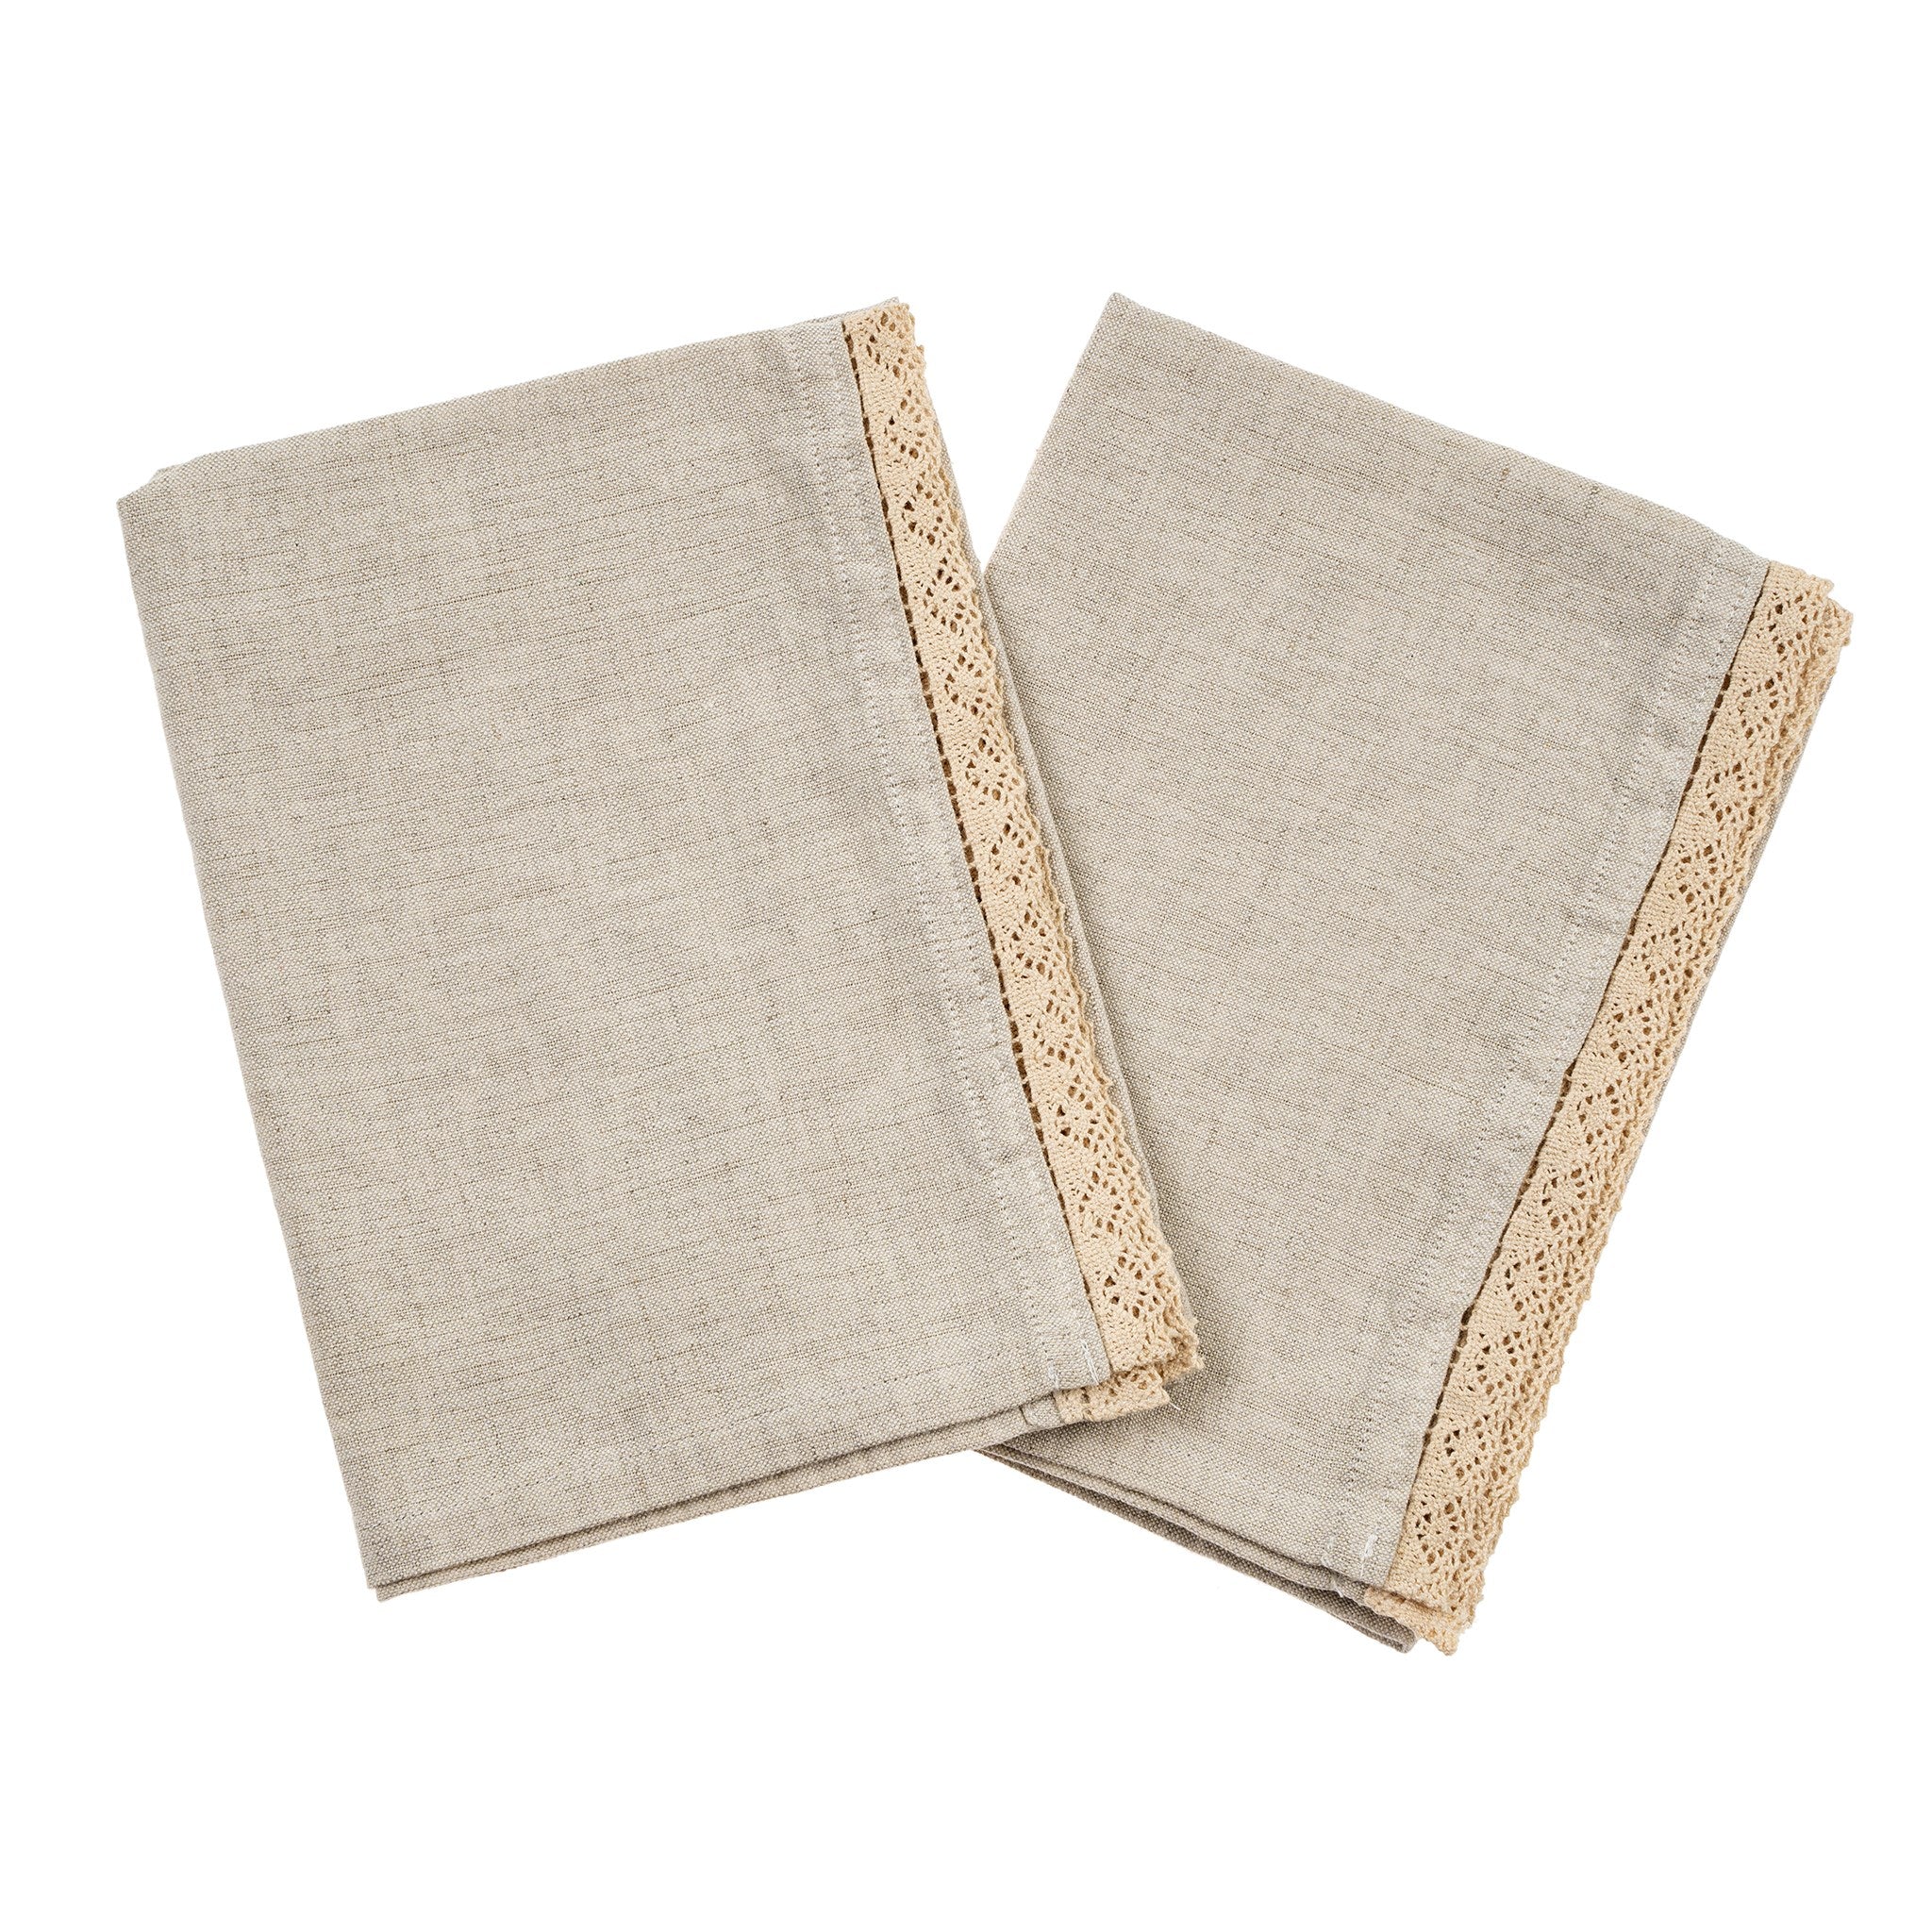 Ecru Lace Linen Towel ( Set of 2)